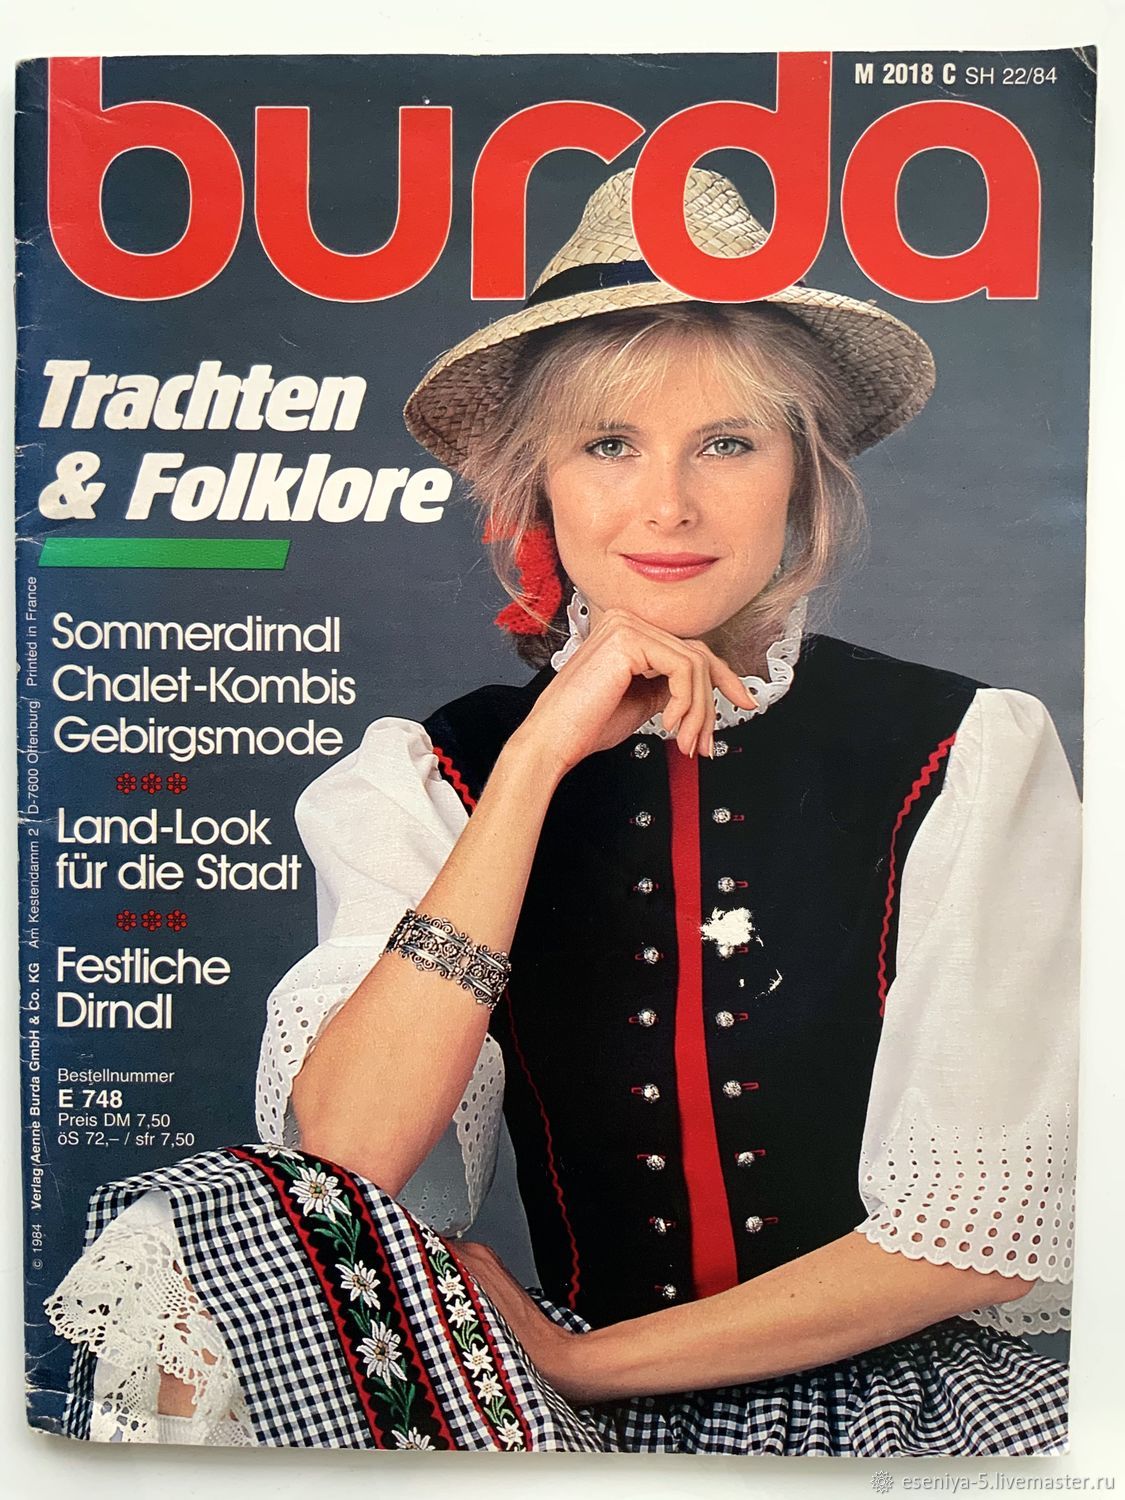 Burda Special Magazine - folklore fashion 1984, Magazines, Moscow,  Фото №1